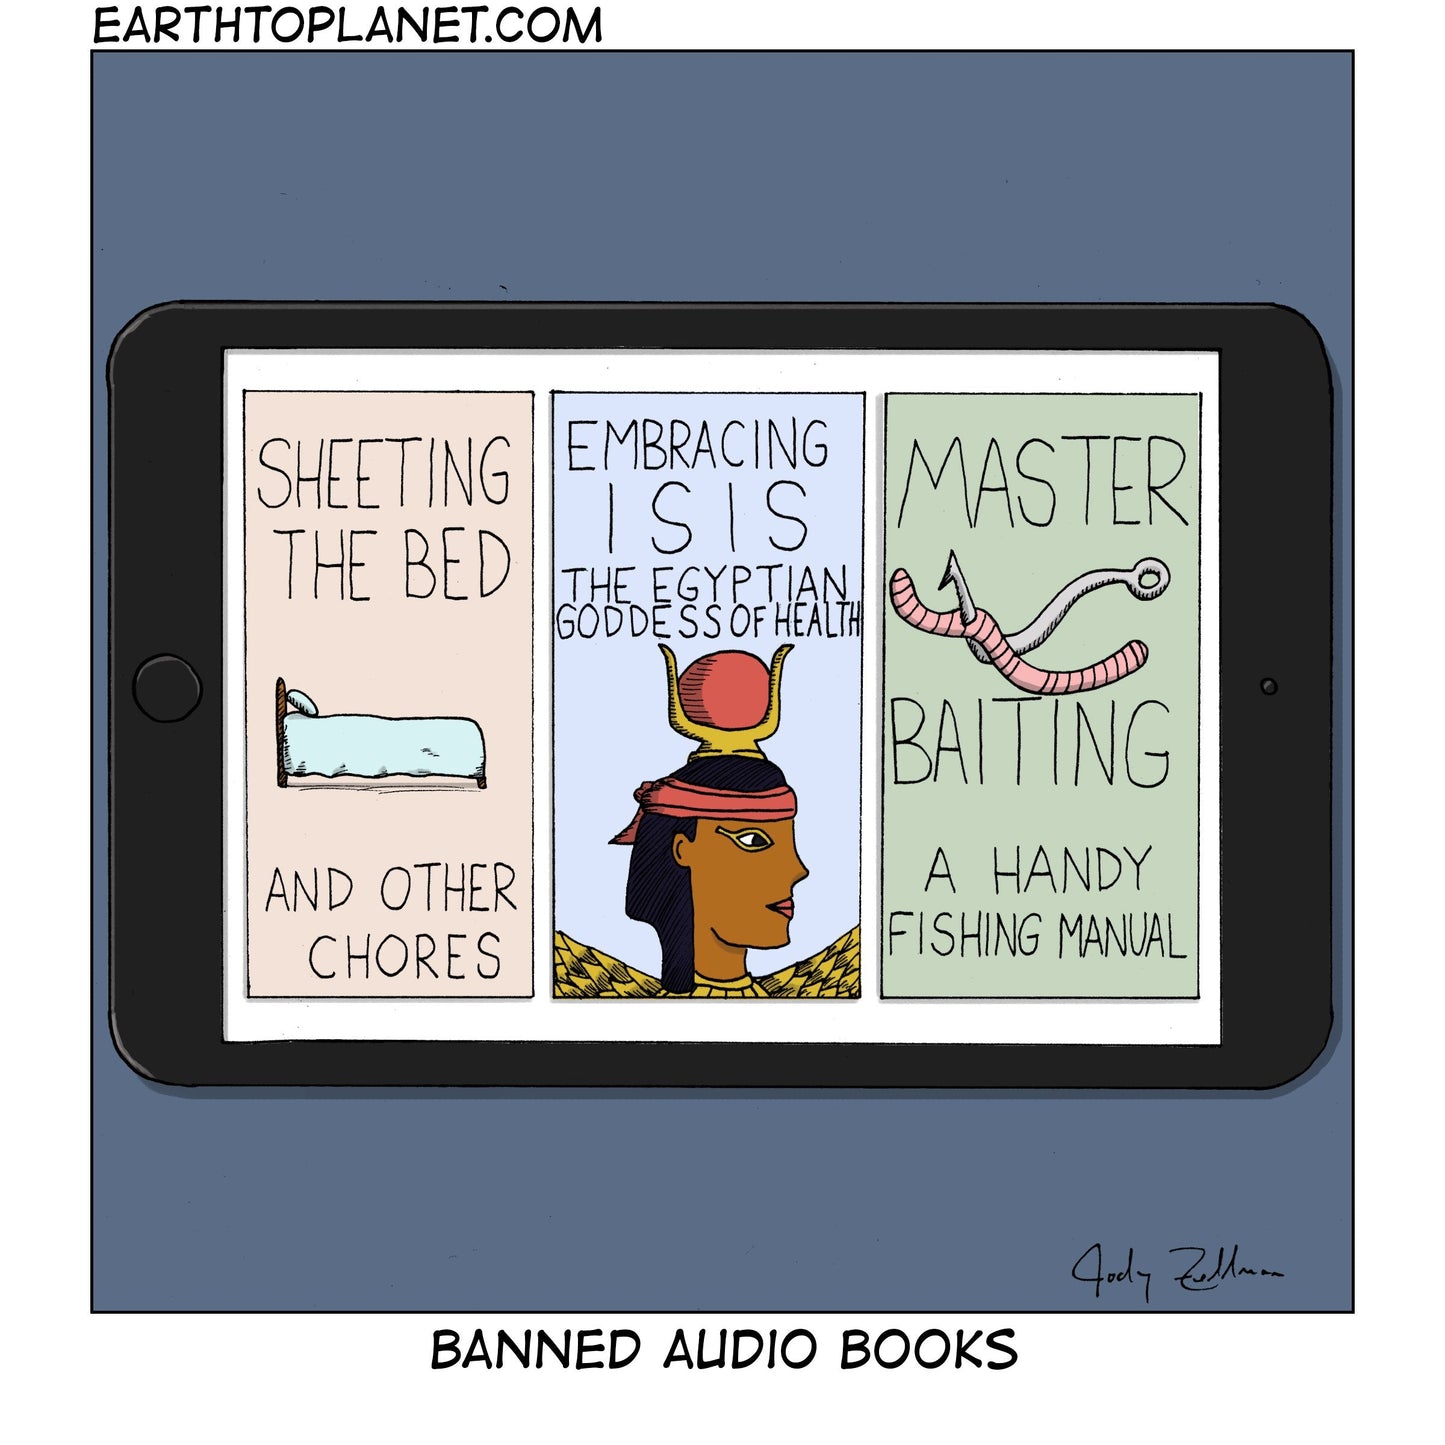 Banned Audio Books Cartoon